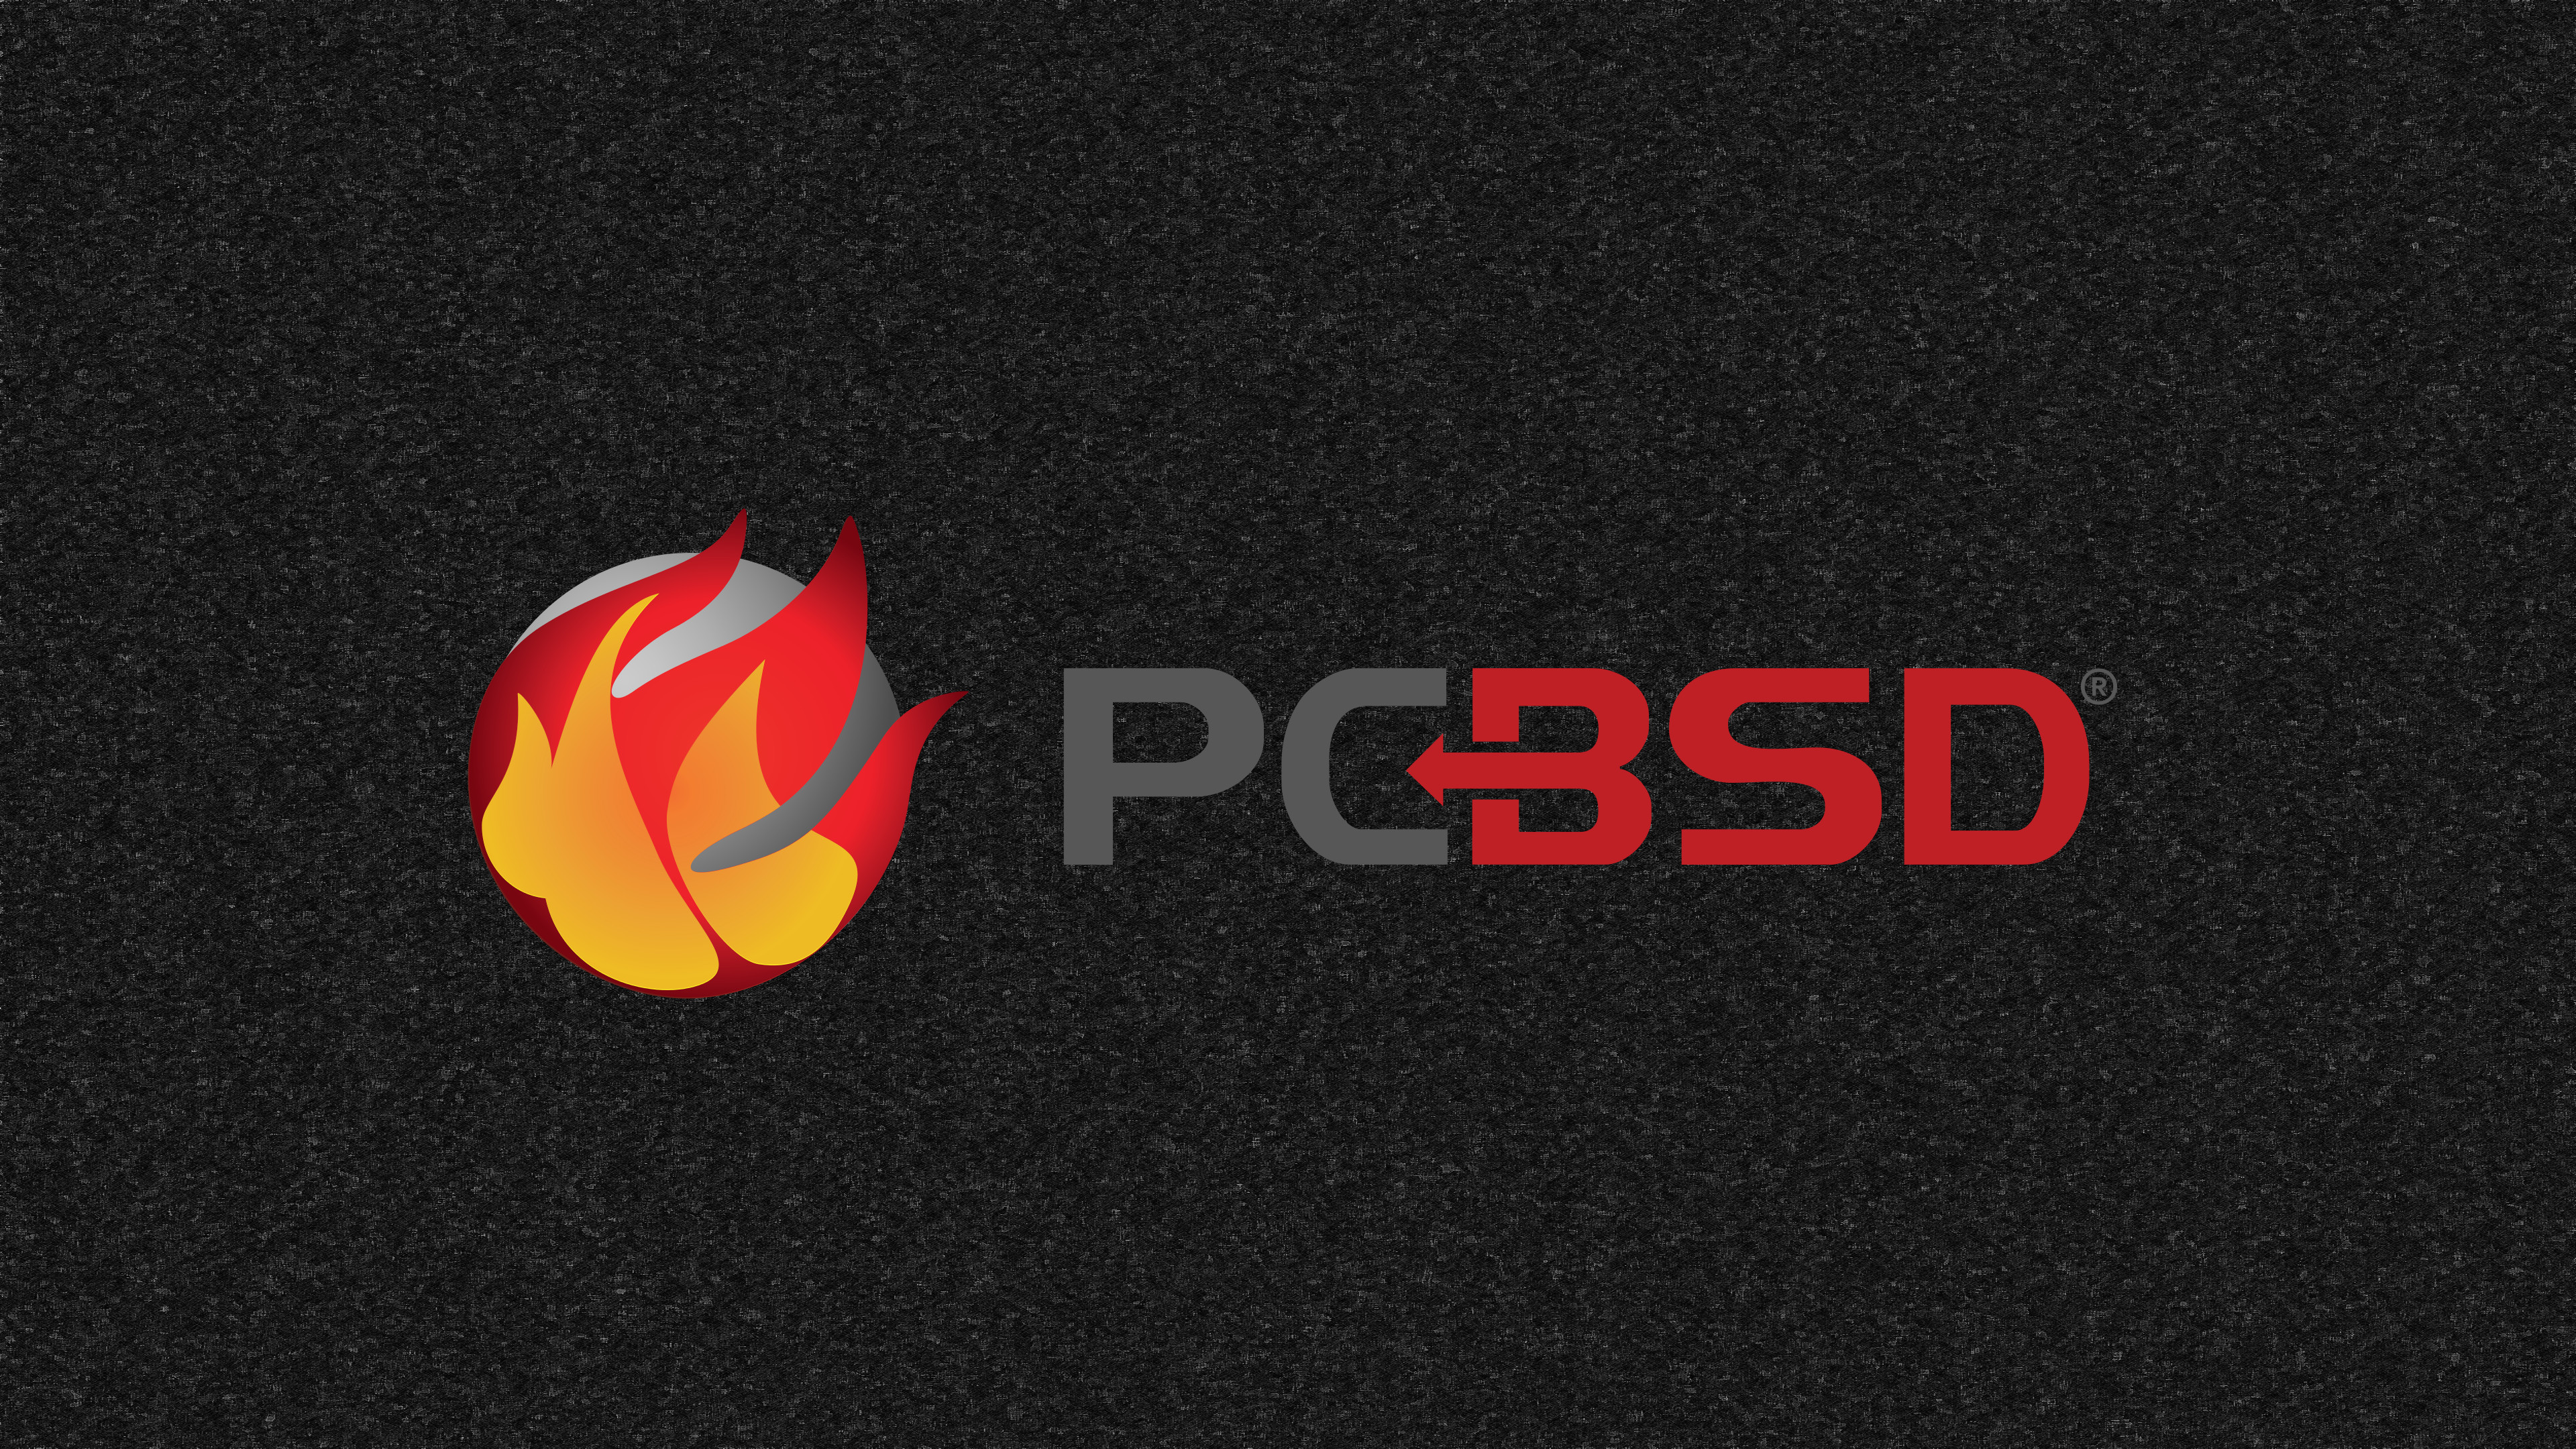 3840x2160 PC-BSD & Lumina Desktop Wallpapers